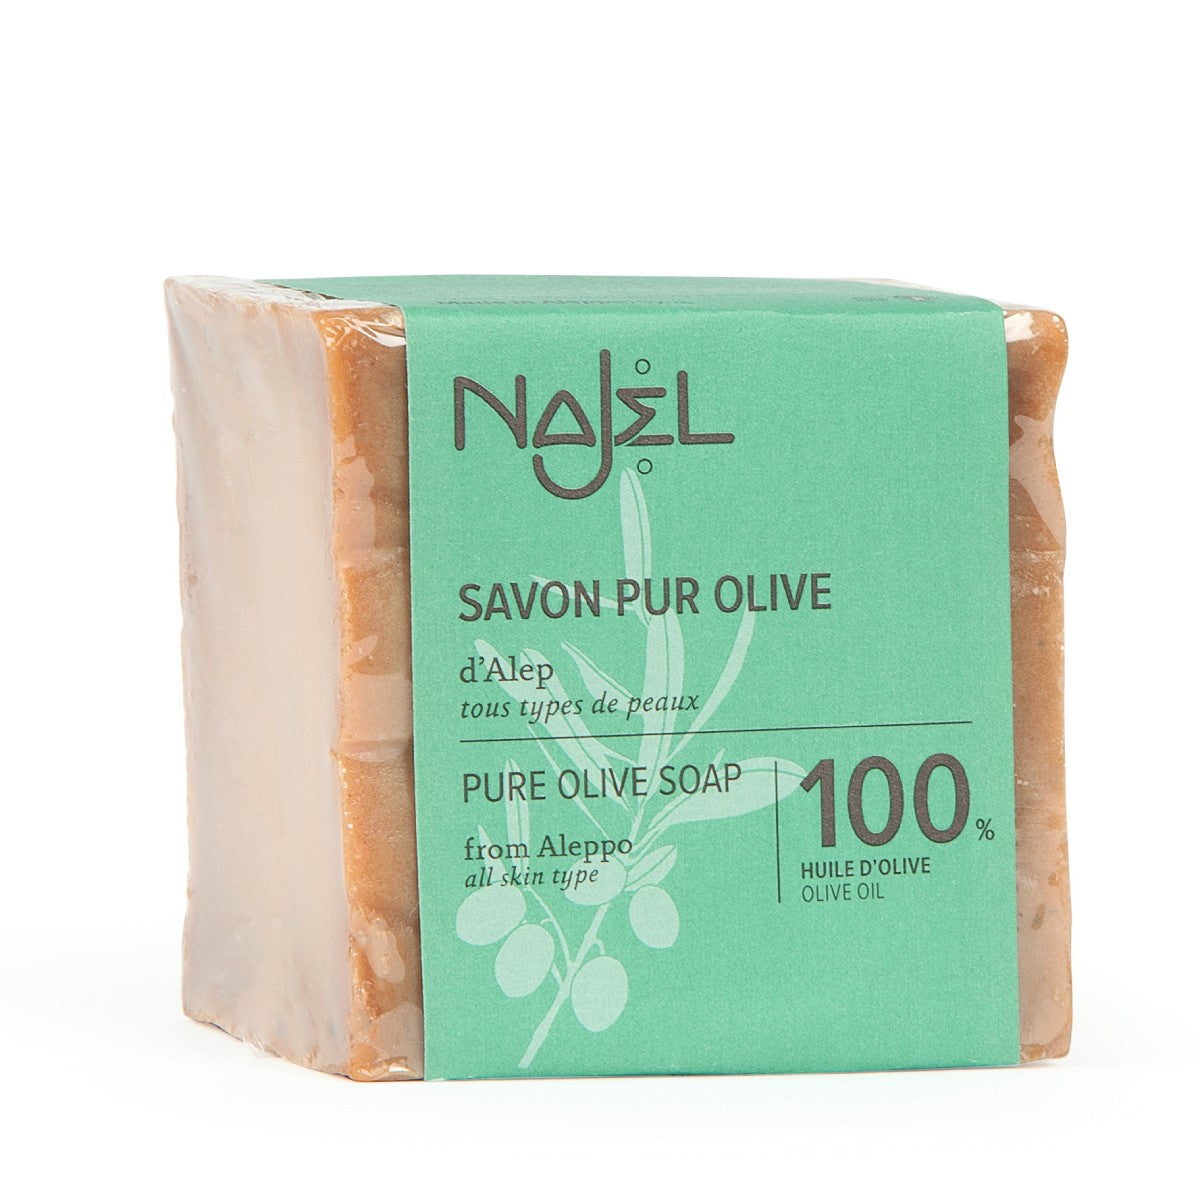 NAJEL Organic Skincare - Aleppo Pure Olive Soap, 100% Olive Oil, 200g